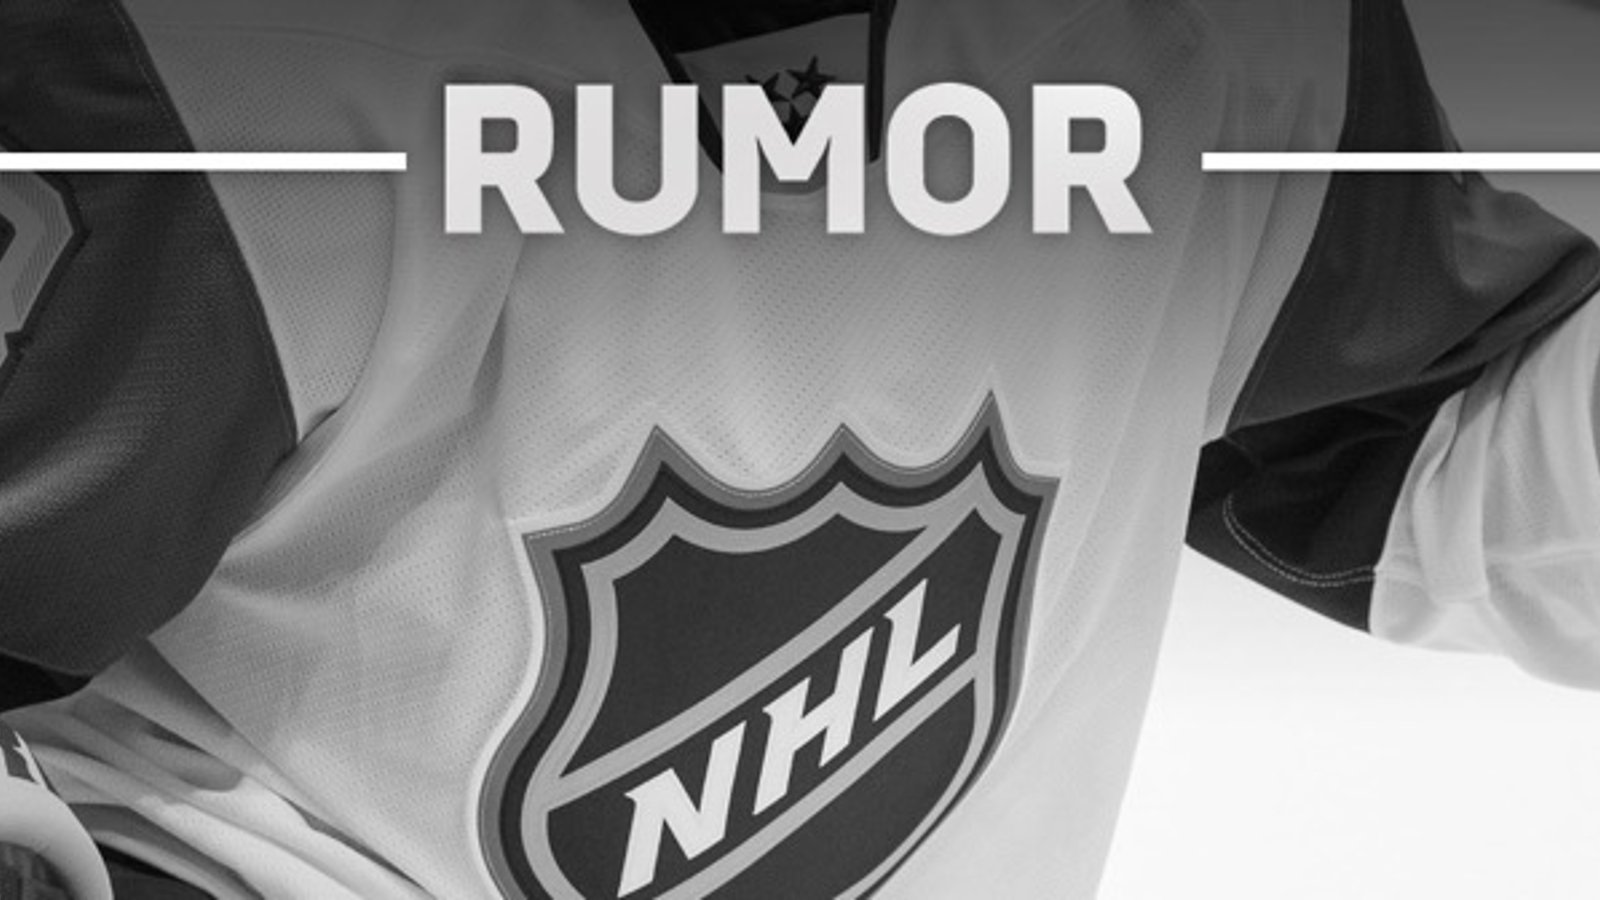 RUMOR: Should the Bruins go for him?